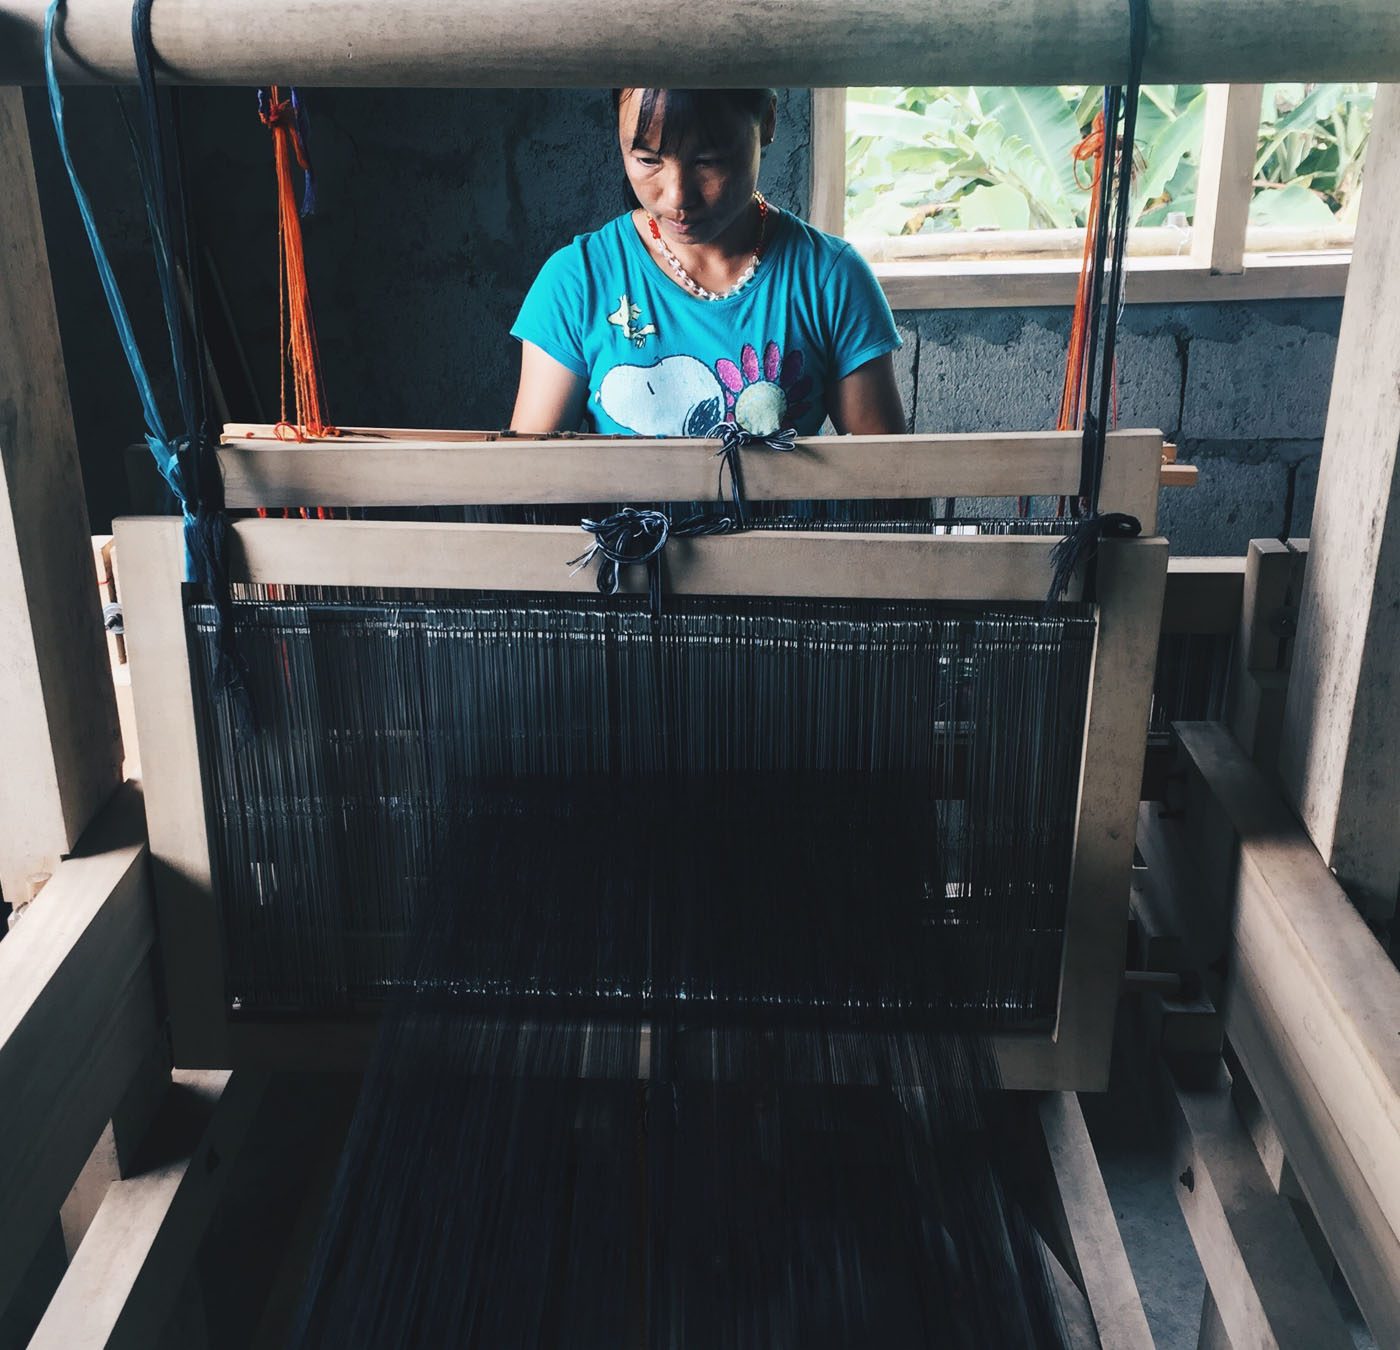 FEU, Kandama showcase creations of Ifugao weavers and designers